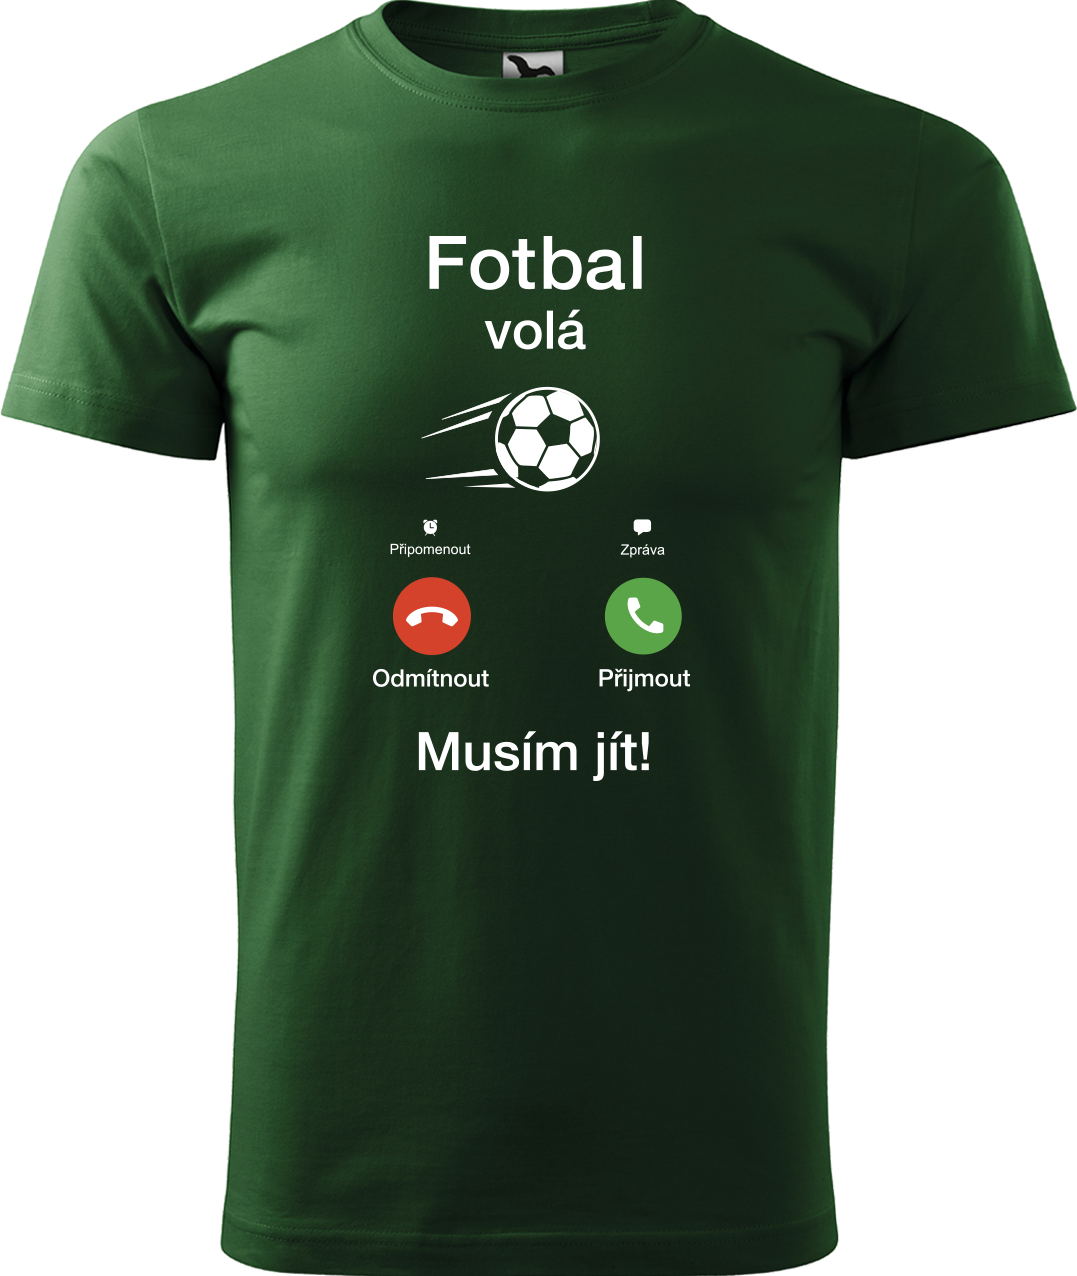 Tričko pro fotbalistu - Fotbal volá Velikost: XL, Barva: Lahvově zelená (06)